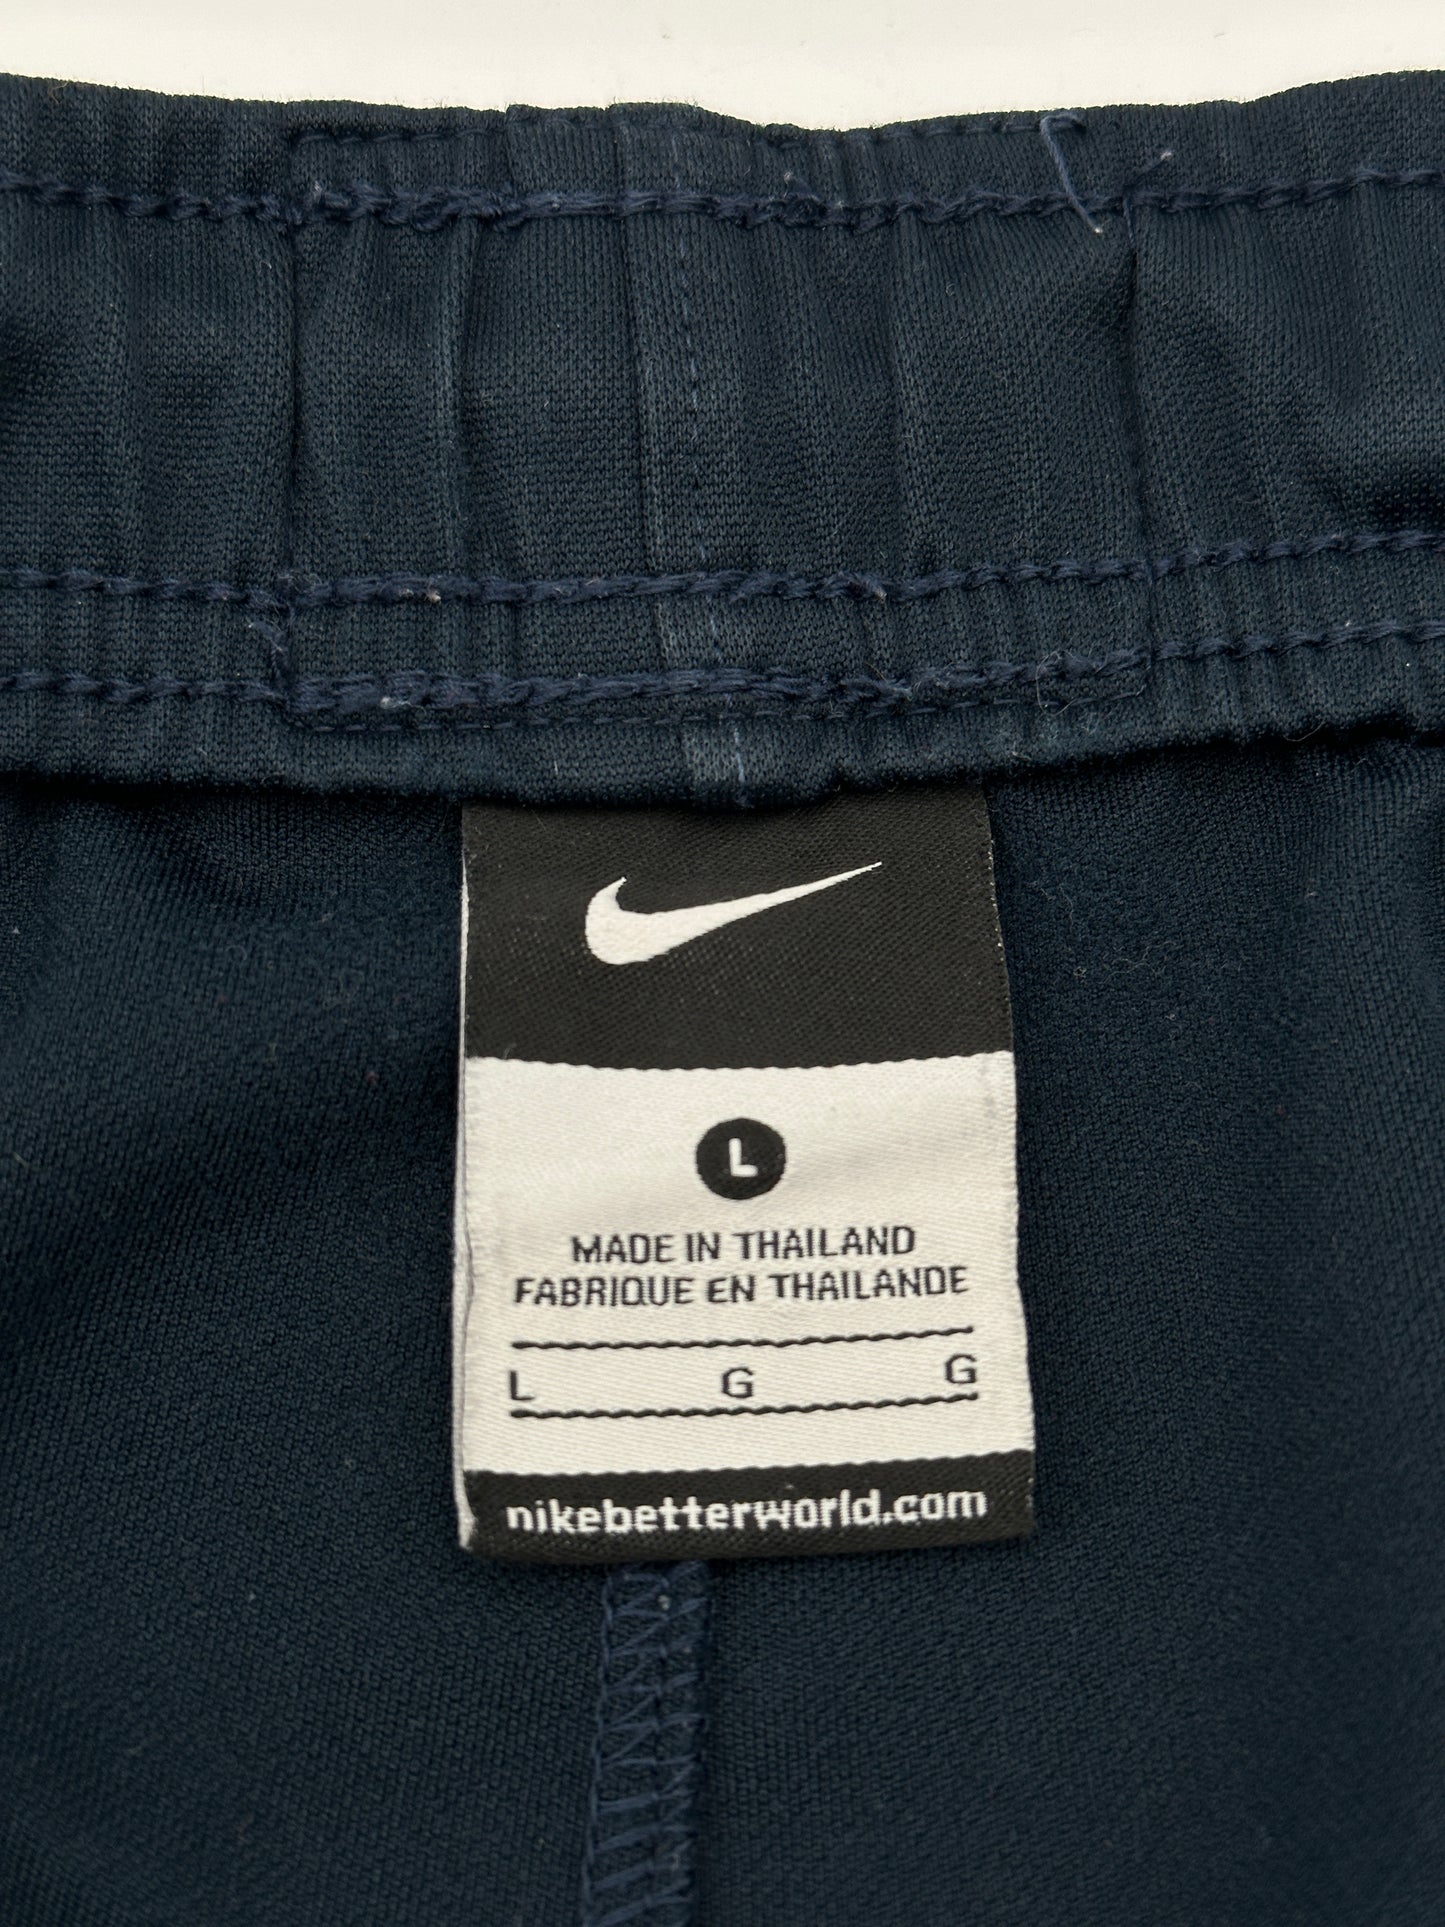 Nike Youth Size L Navy Blue Athletic Shorts